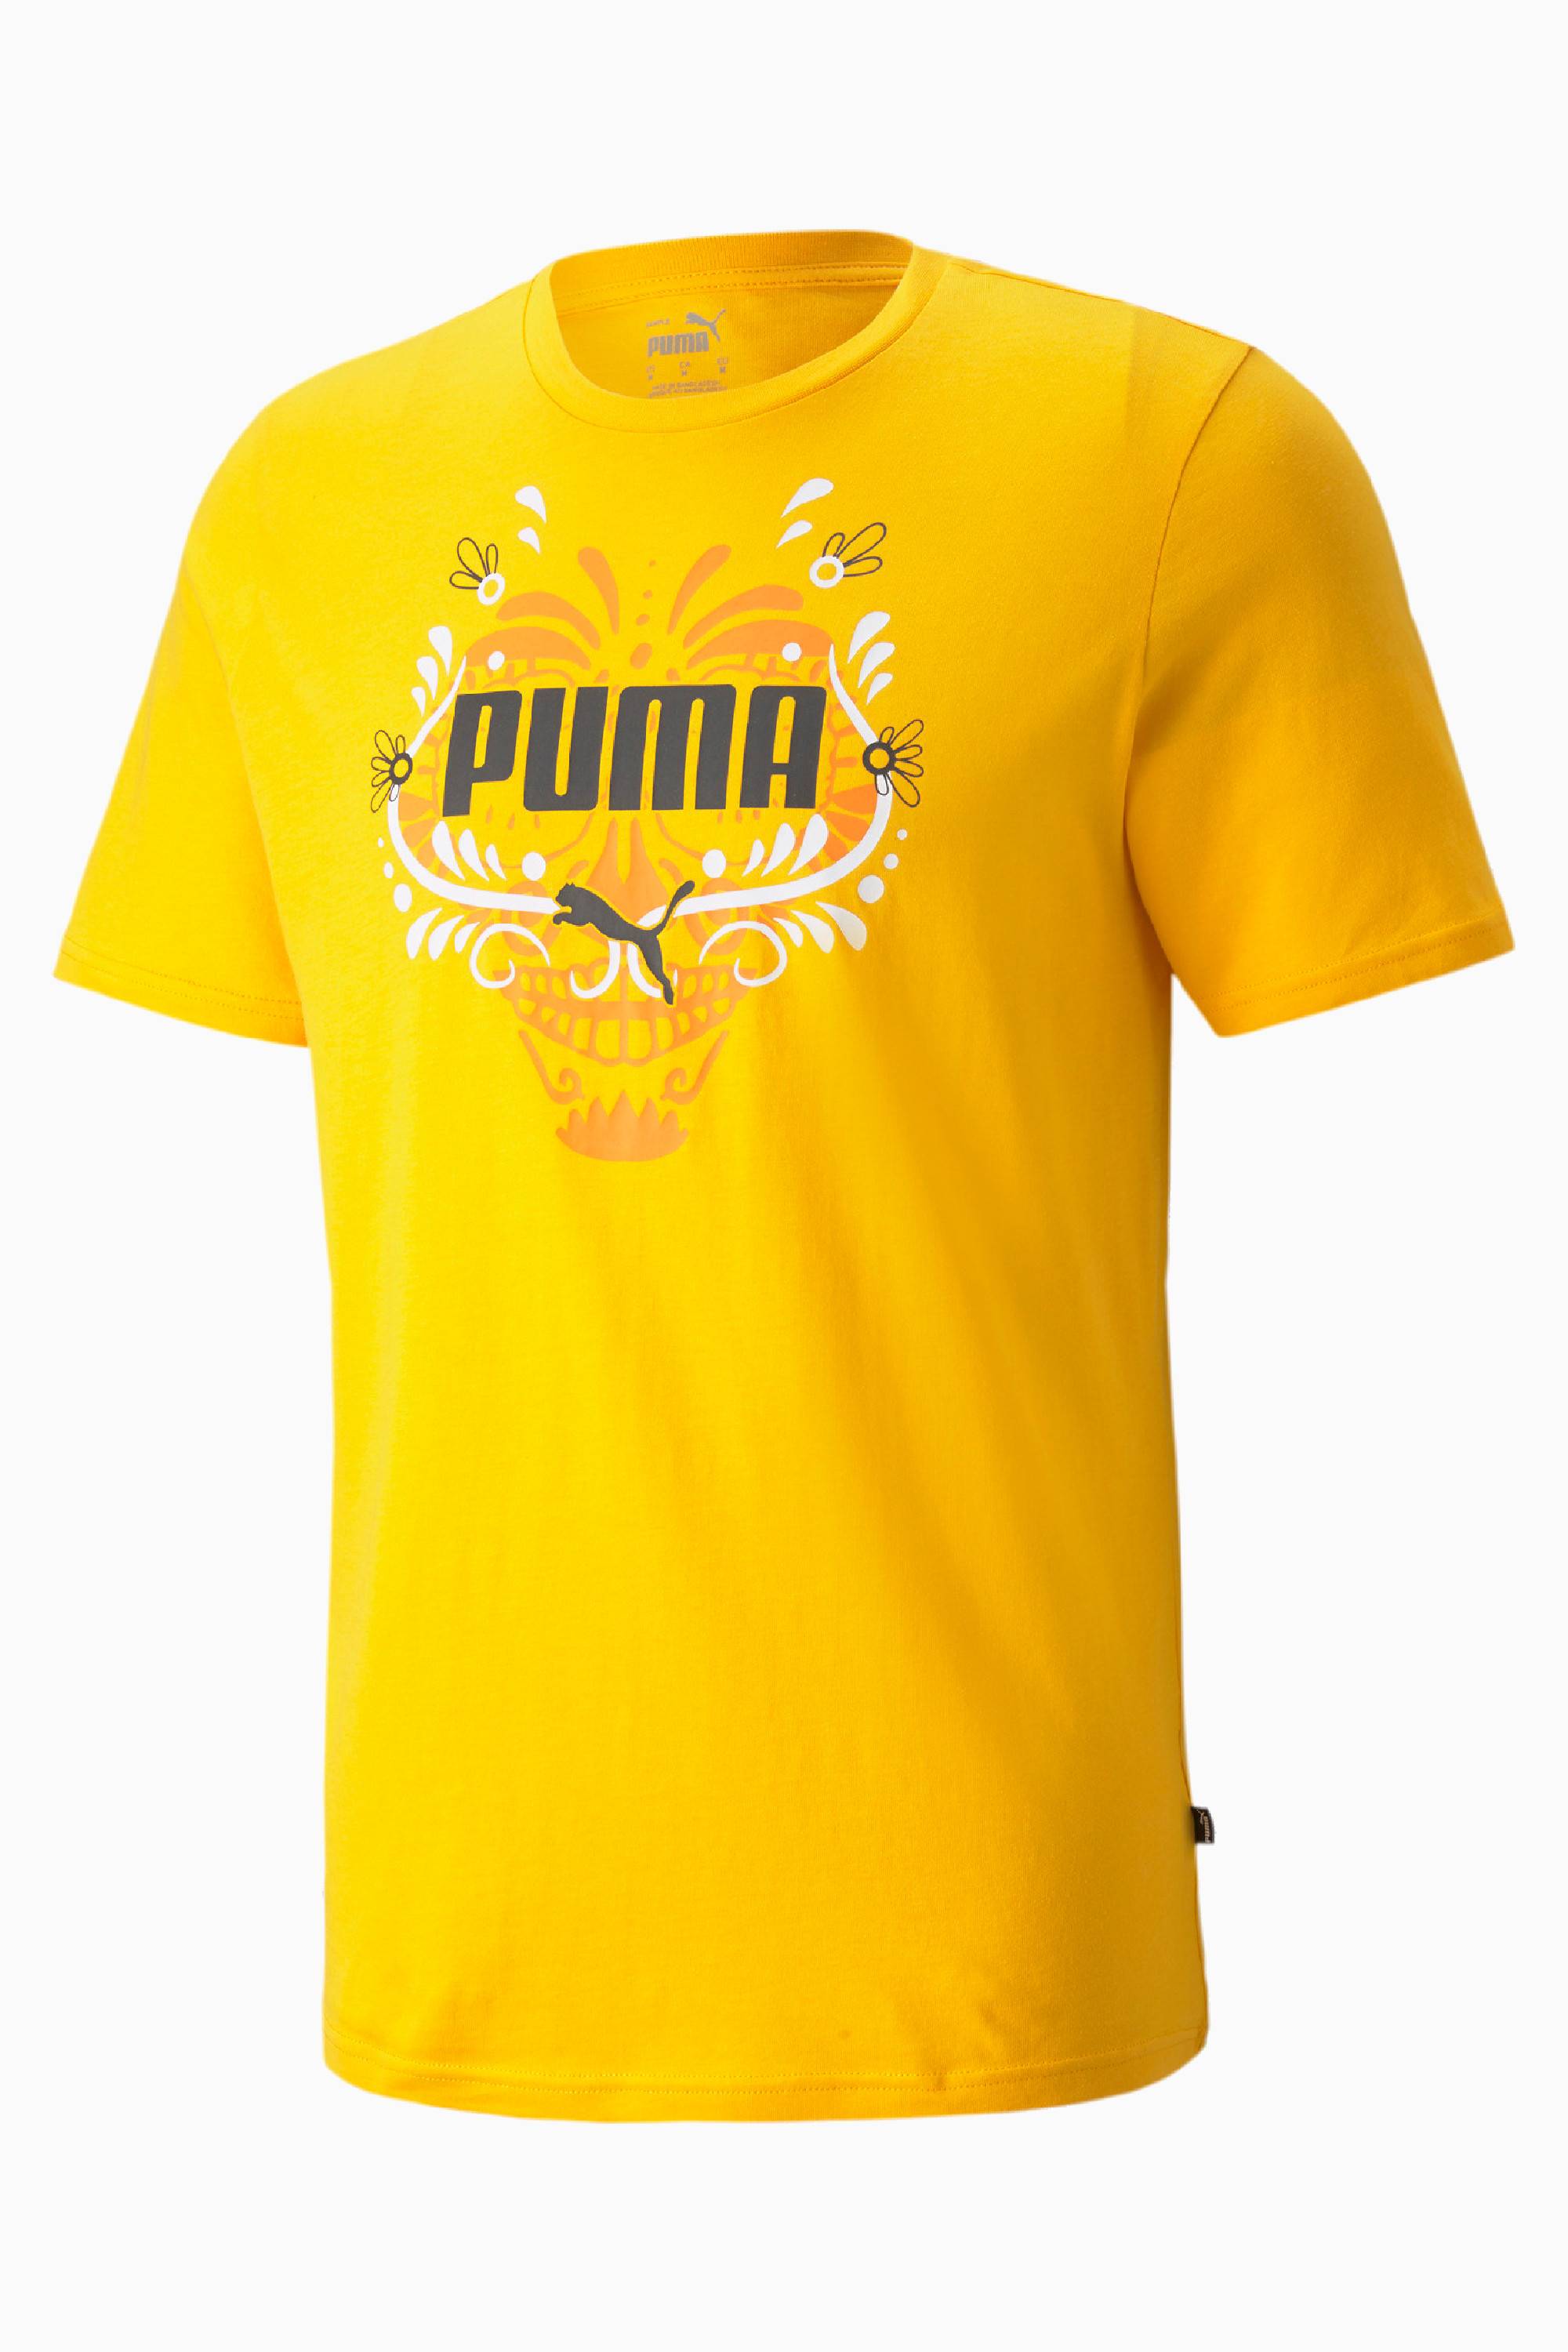 T-Shirt Puma Advanced Graphic Tee | R-GOL.com - Football boots & equipment